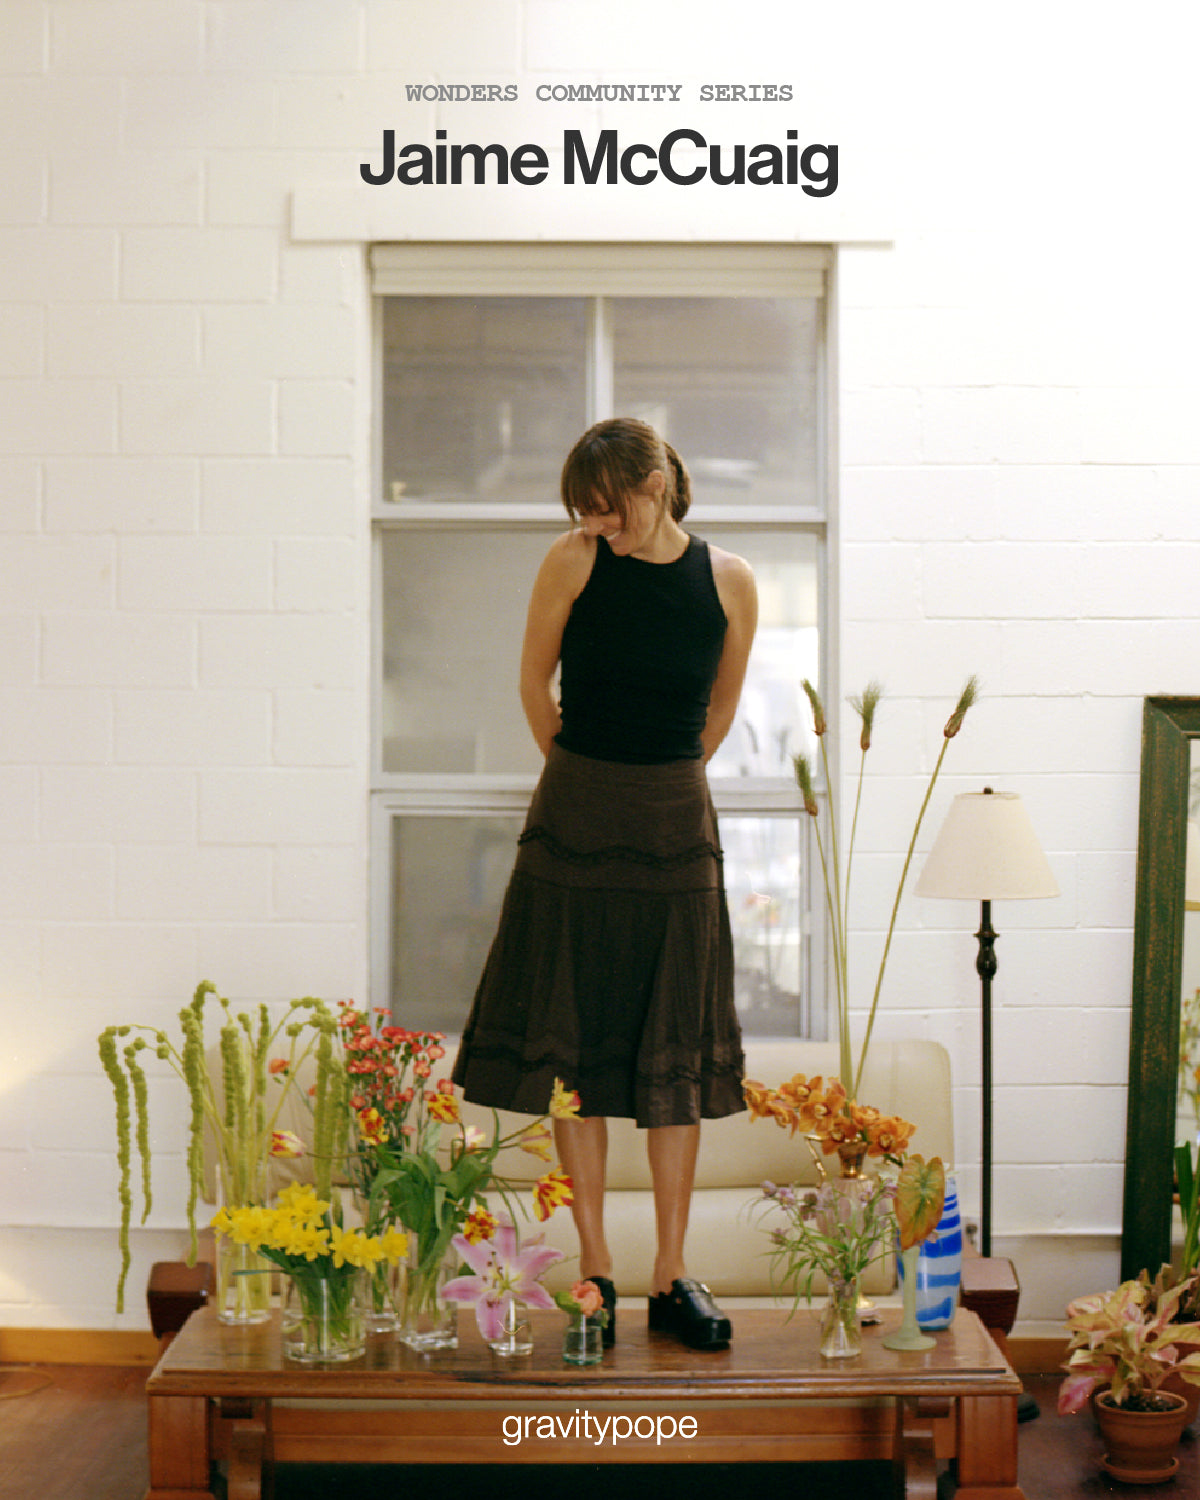 Wonders Community Series — Jaime McCuaig